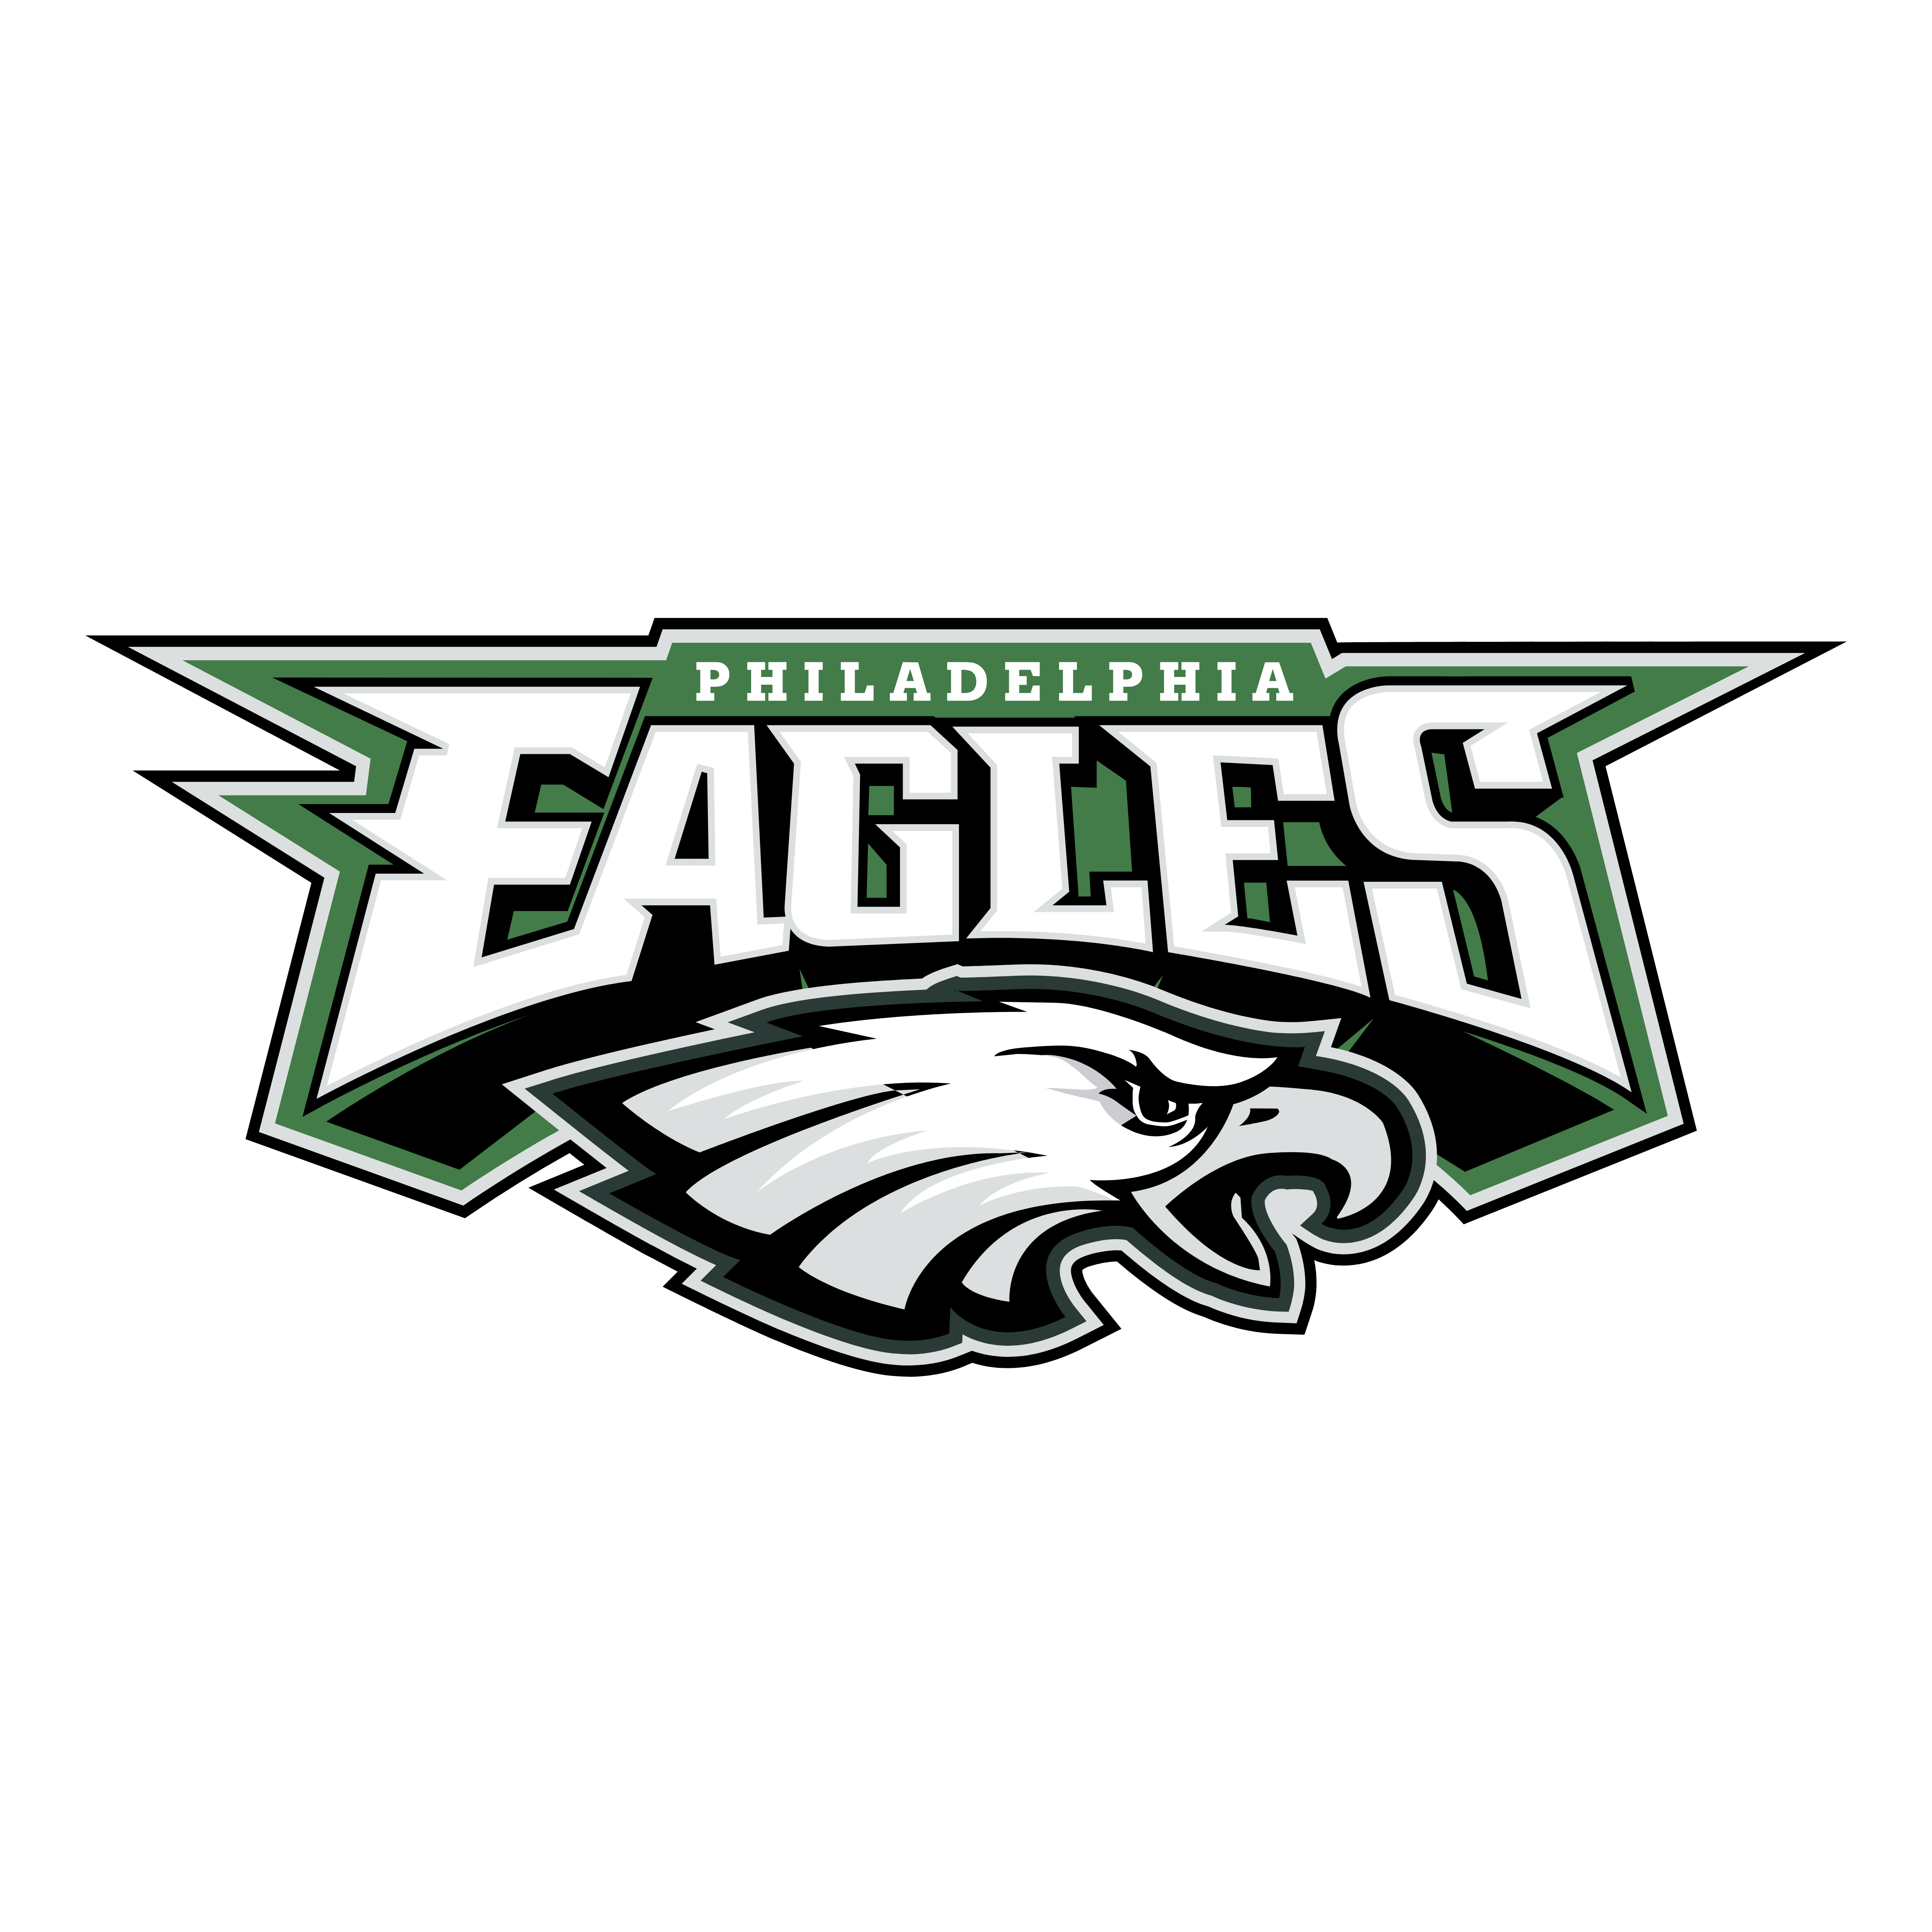 Philadelphia Eagles Logos Download